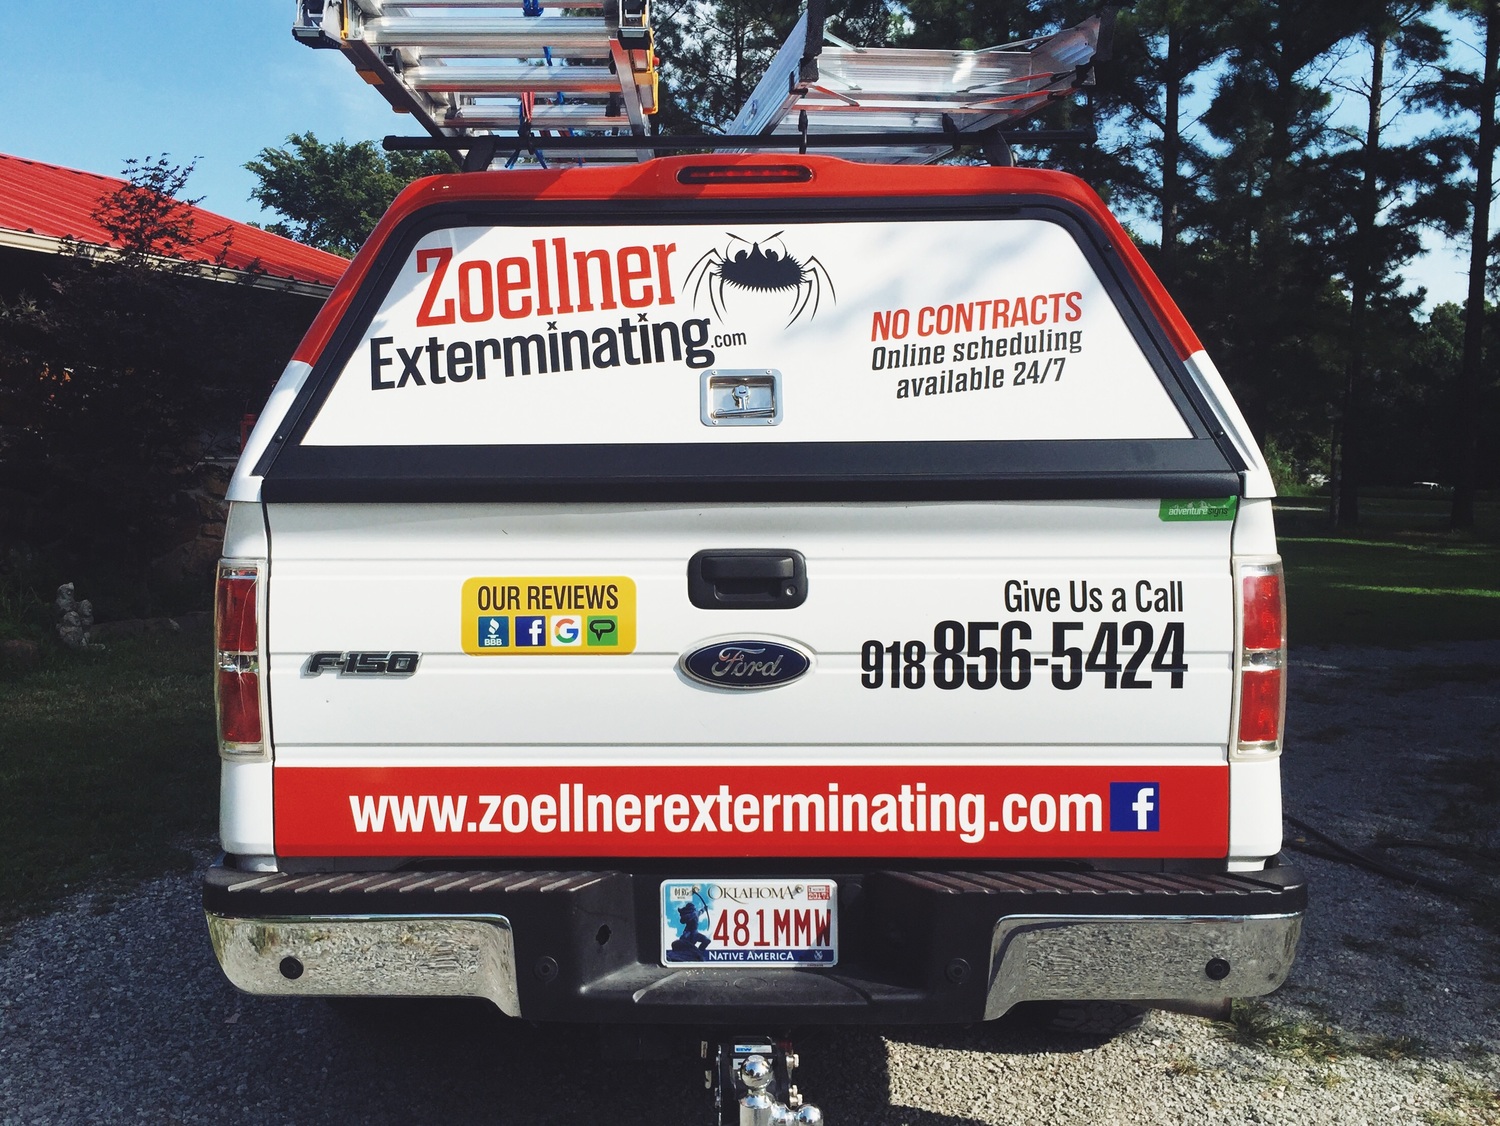 Zoellner Exterminating 2012 Supercab Partial Wrap.jpg